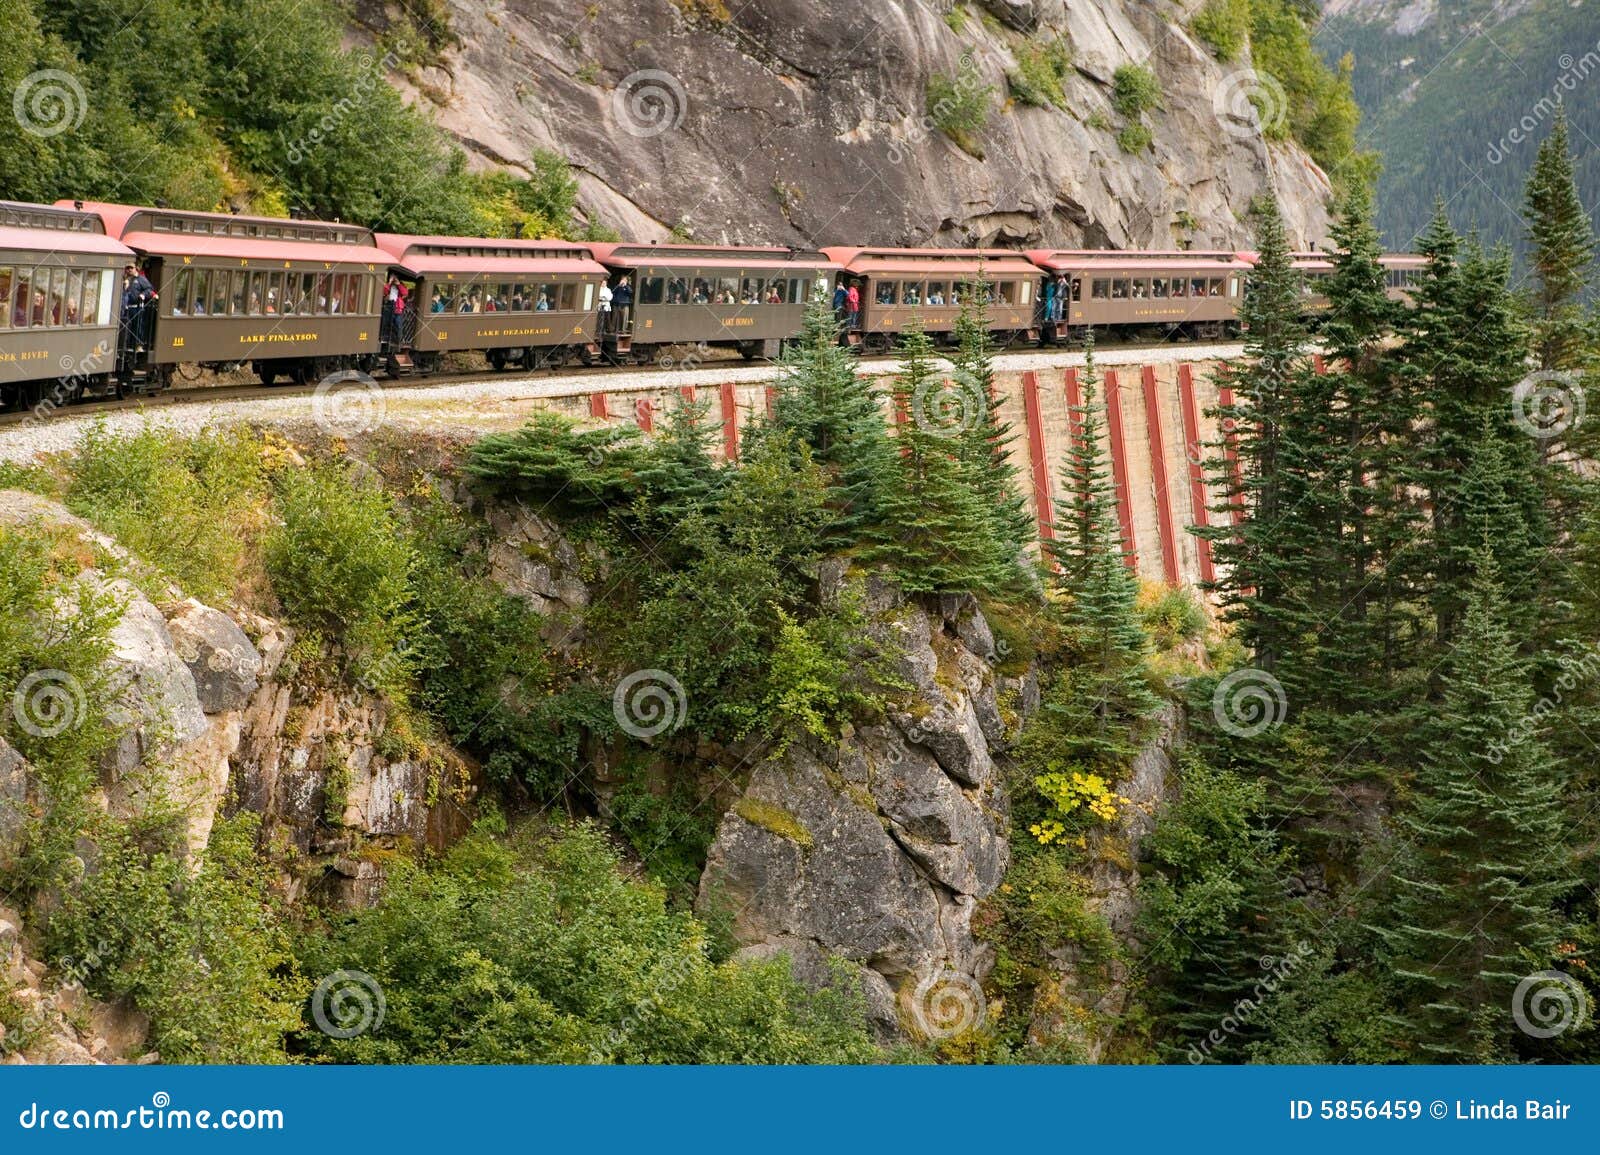 scenic railroad - alaska